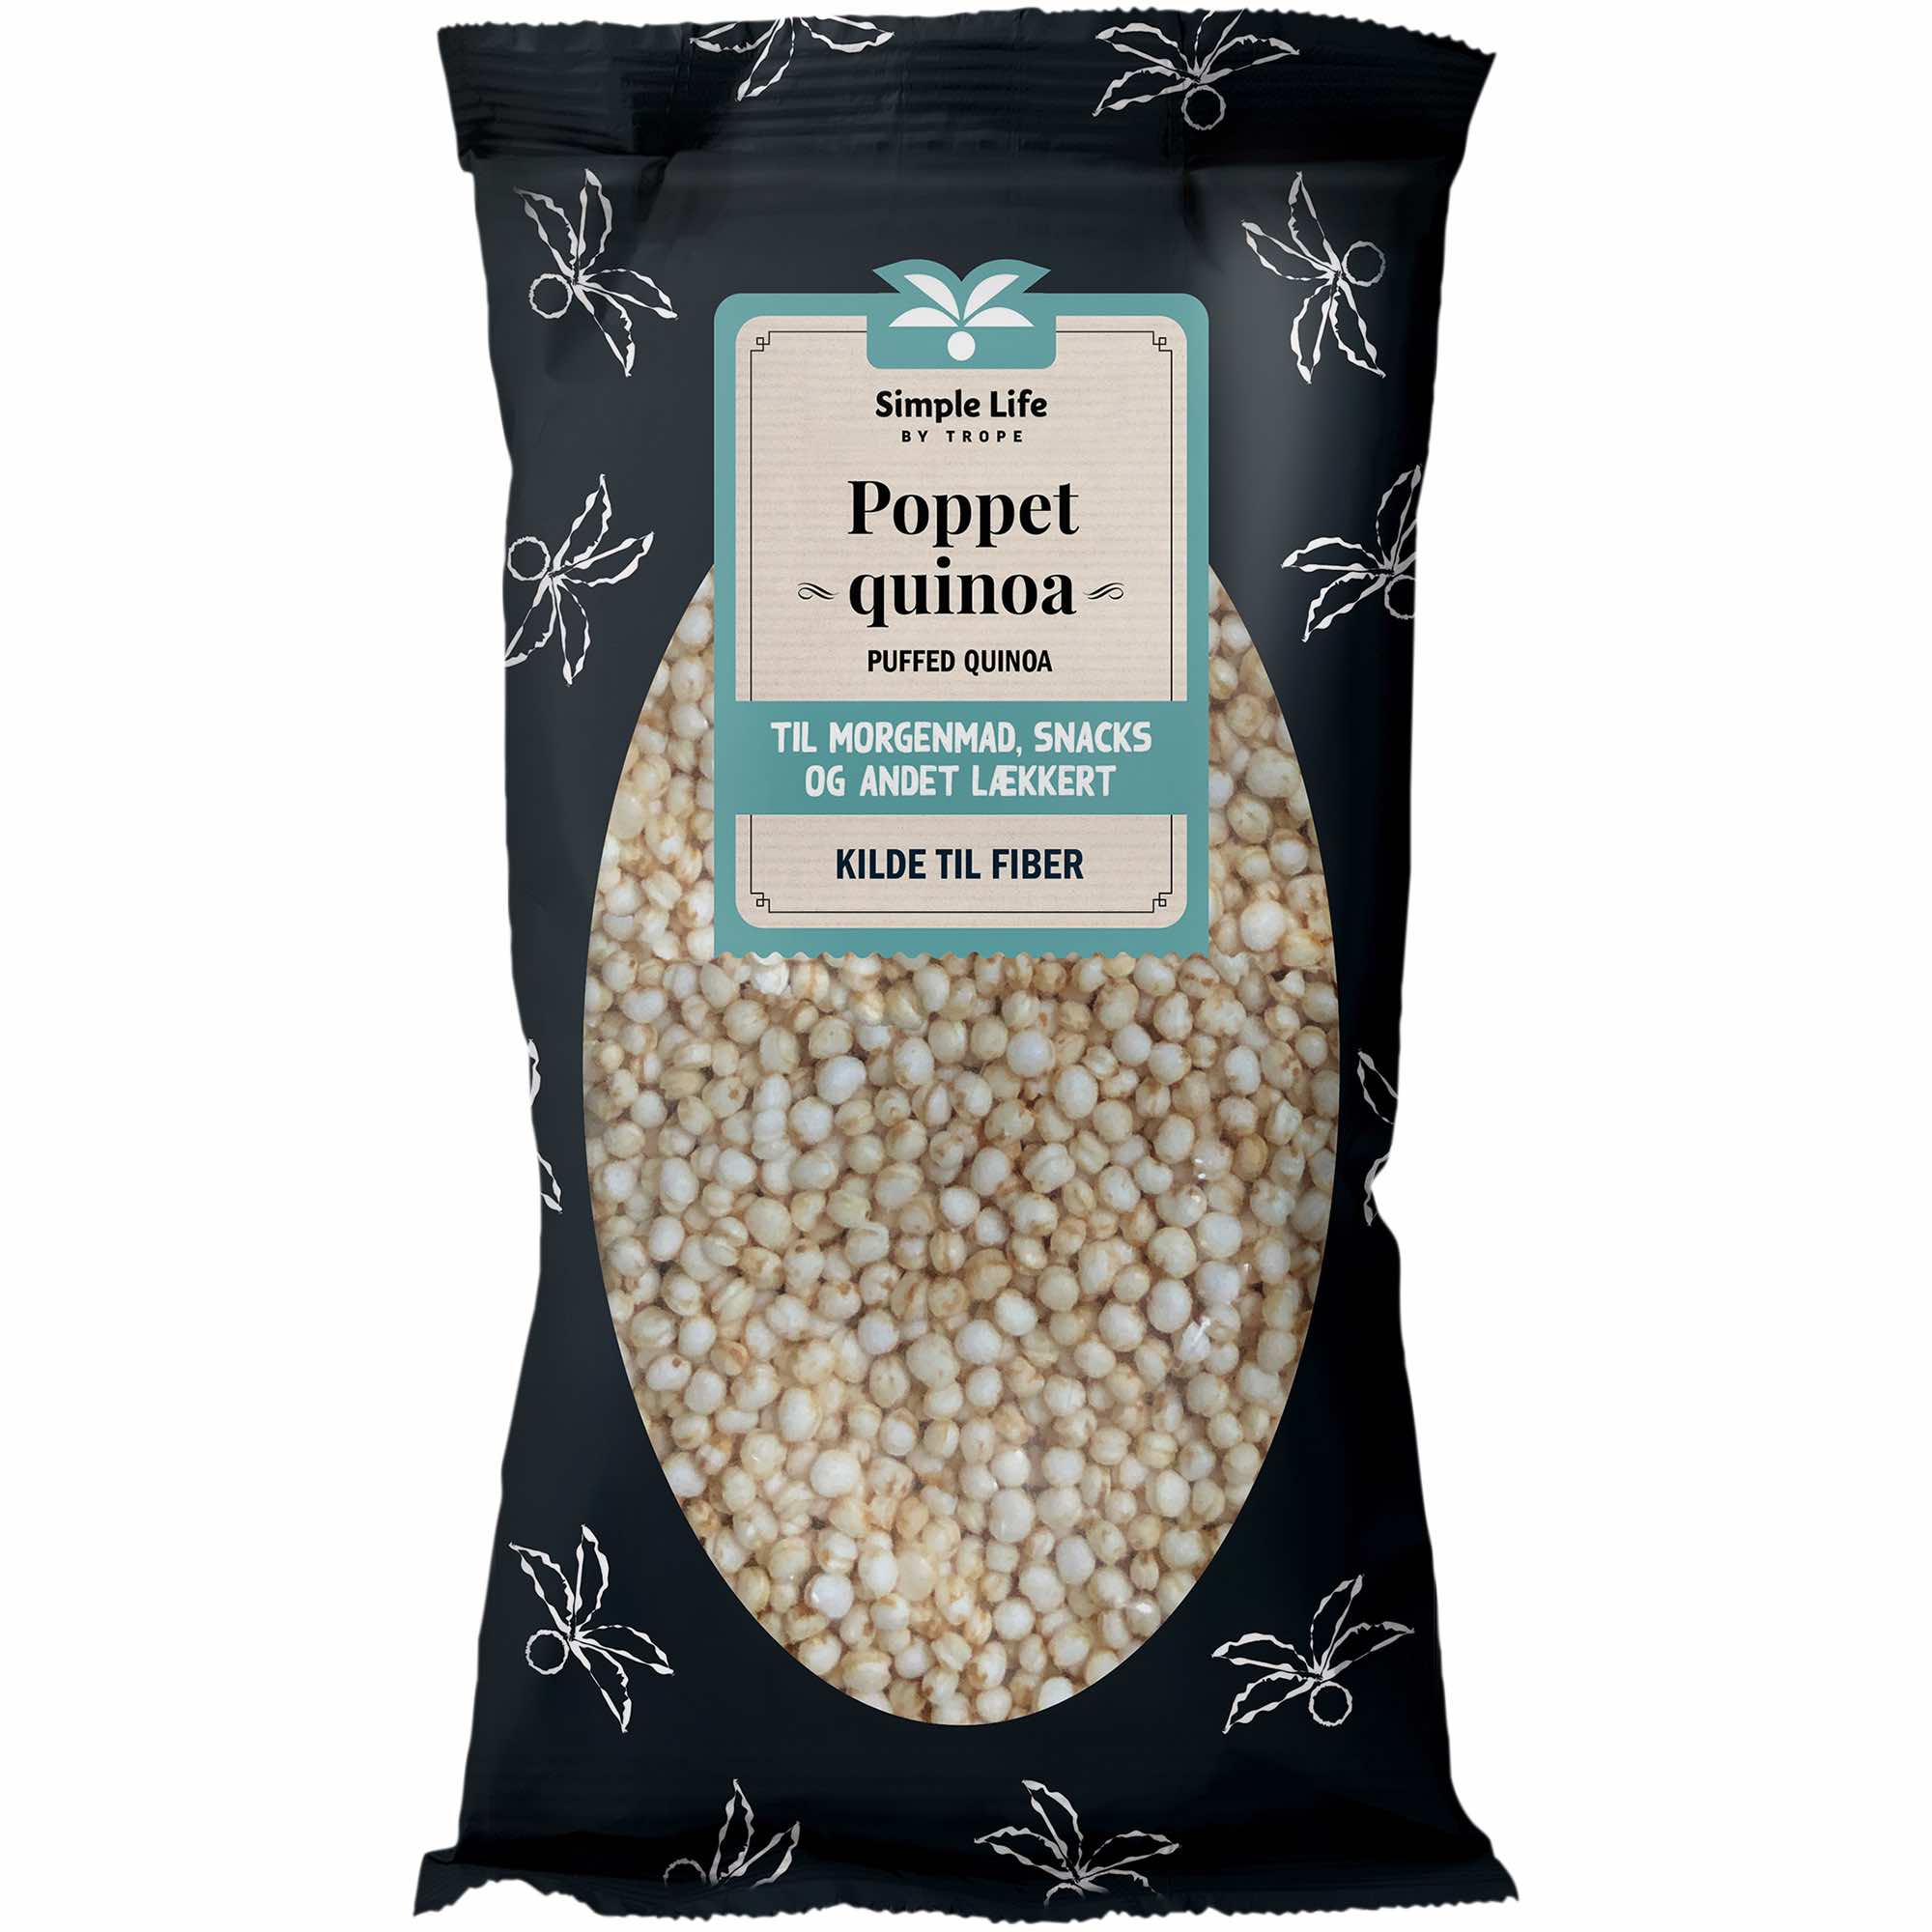 Poppede Quinoa - Simple Life